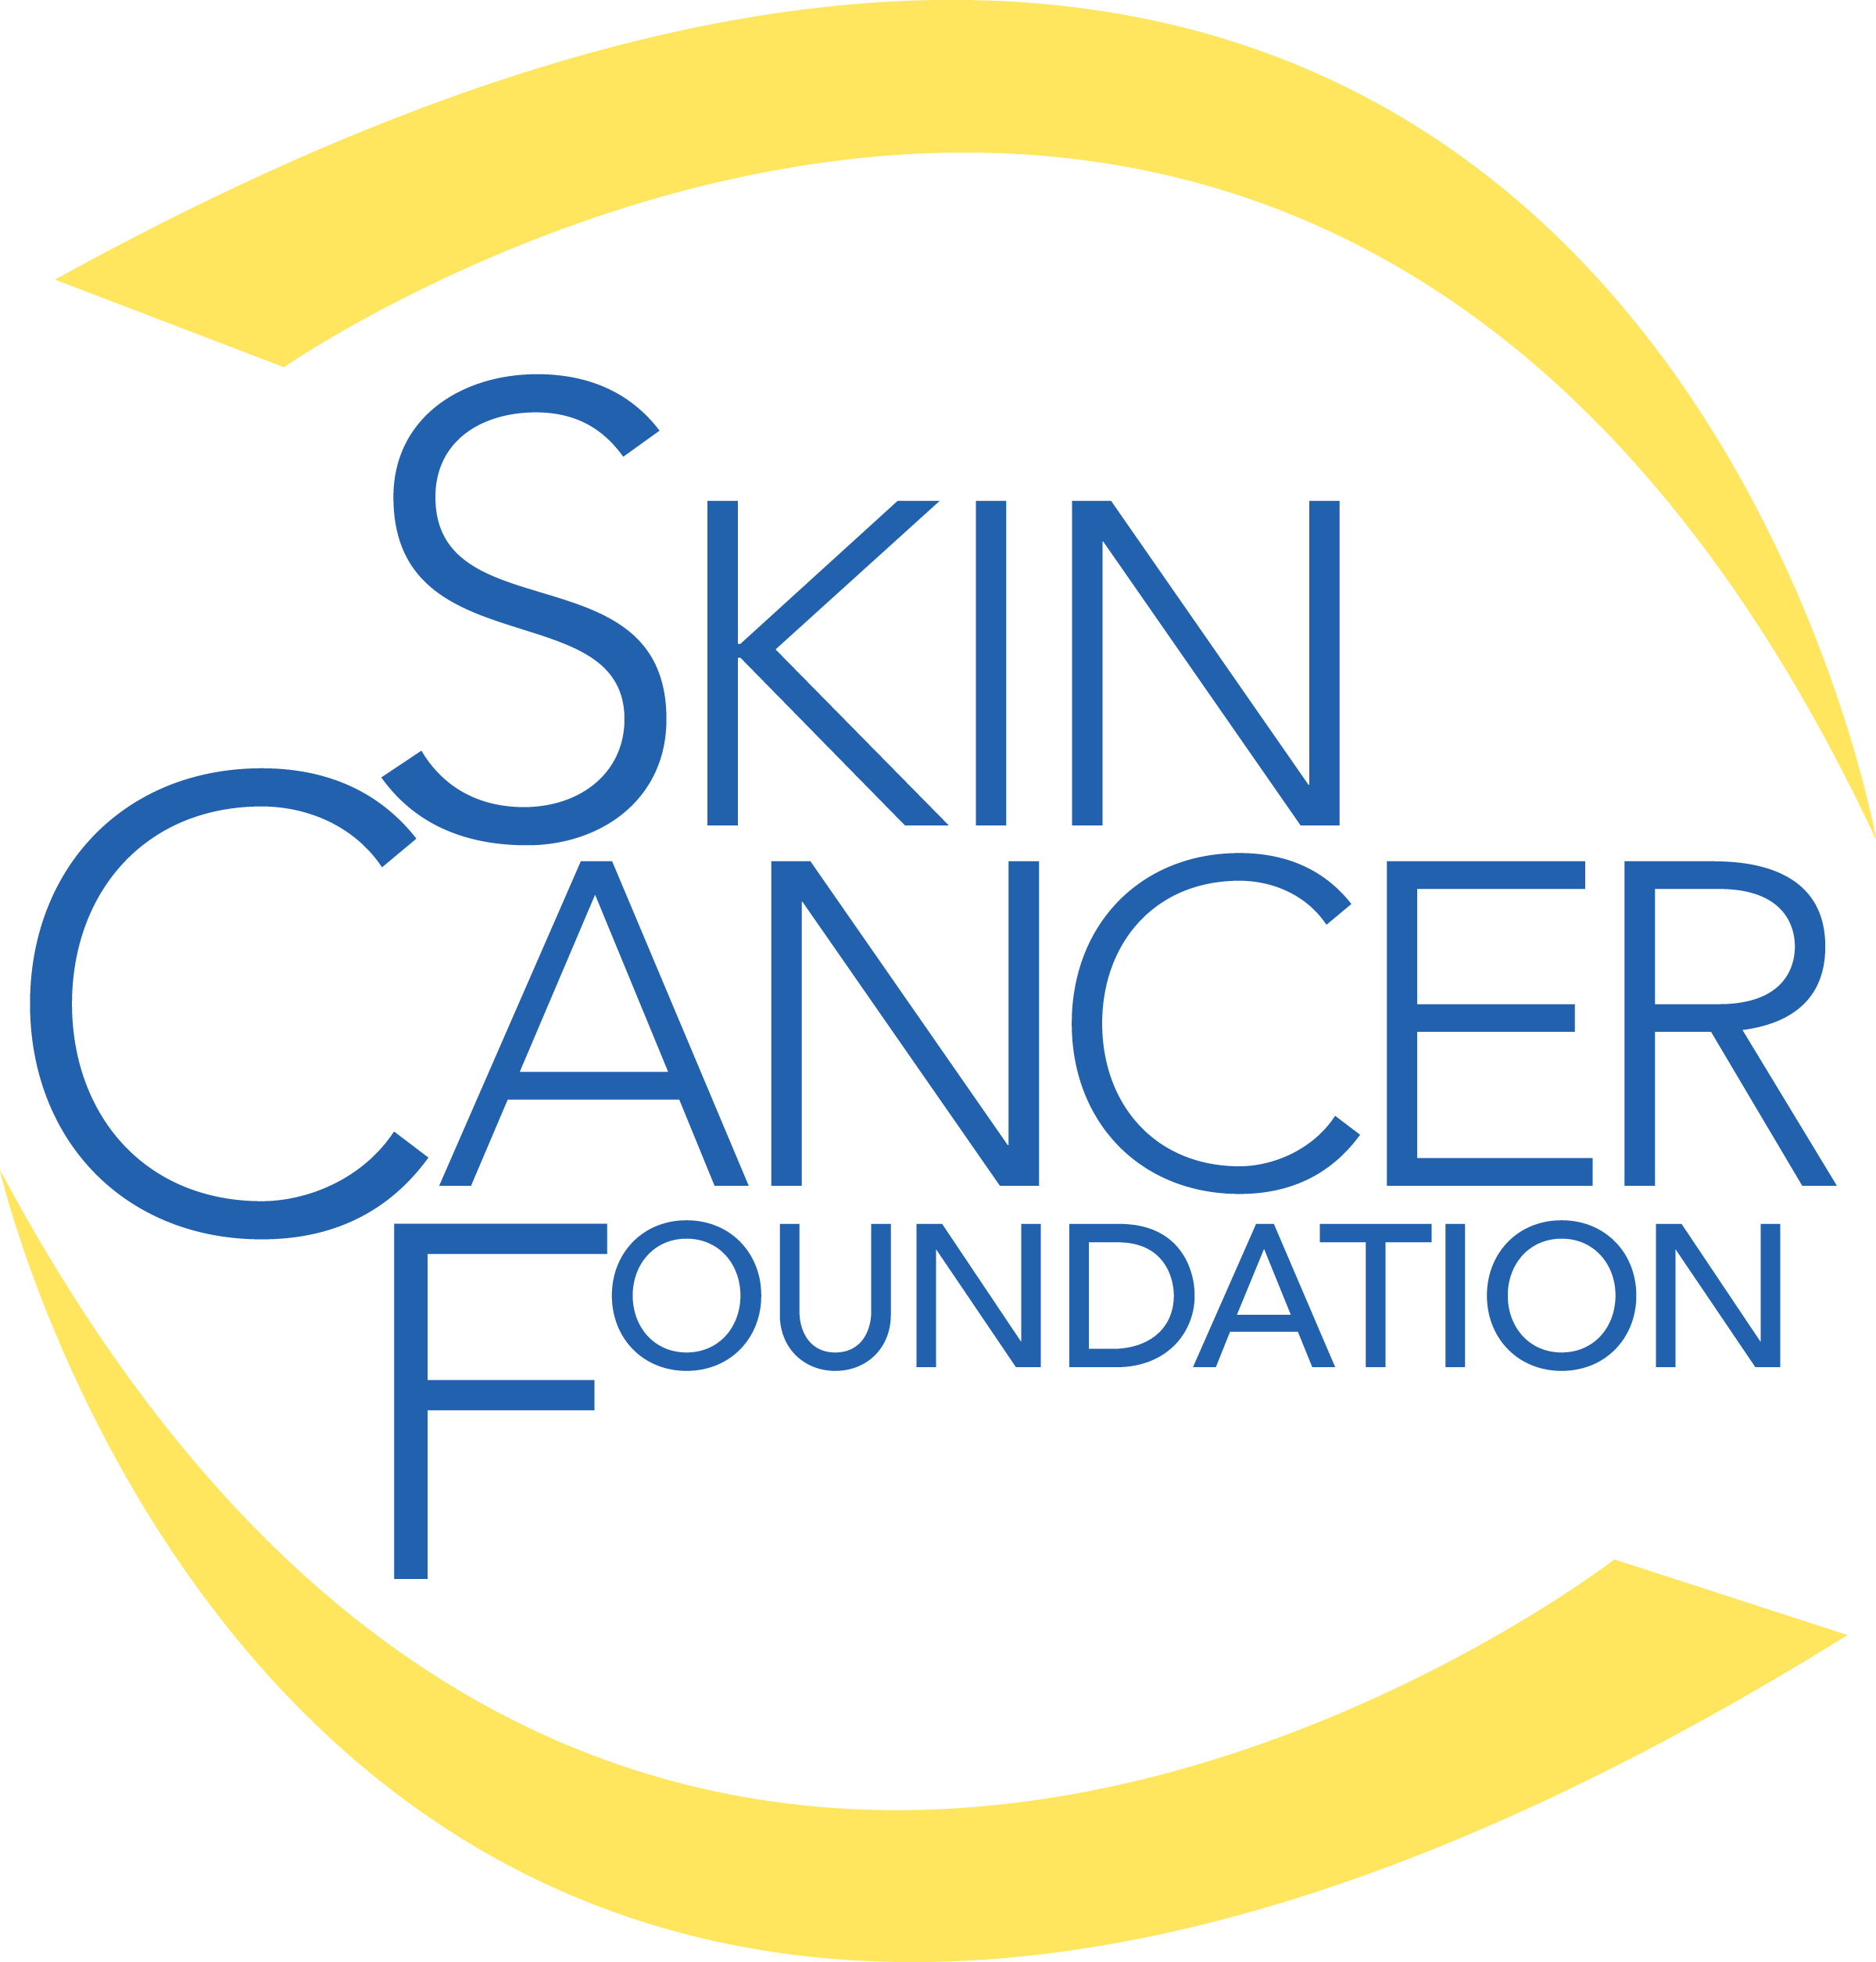 The Skin Cancer Foundation logo